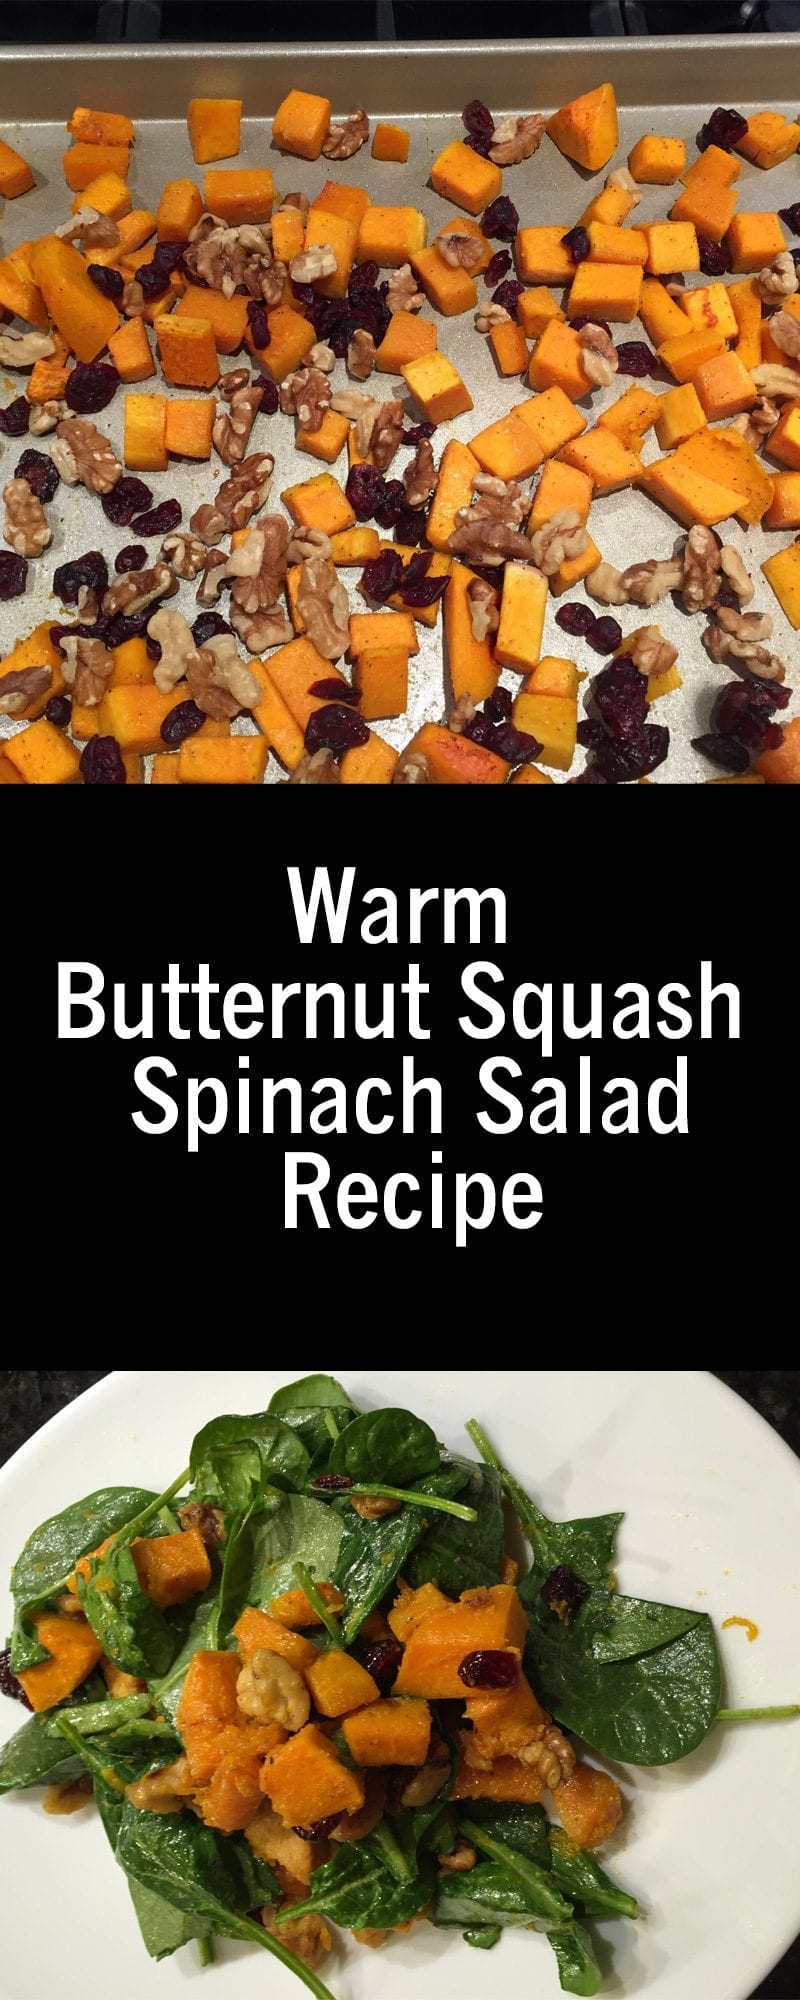 Warm Butternut Squash Spinach Salad Recipe